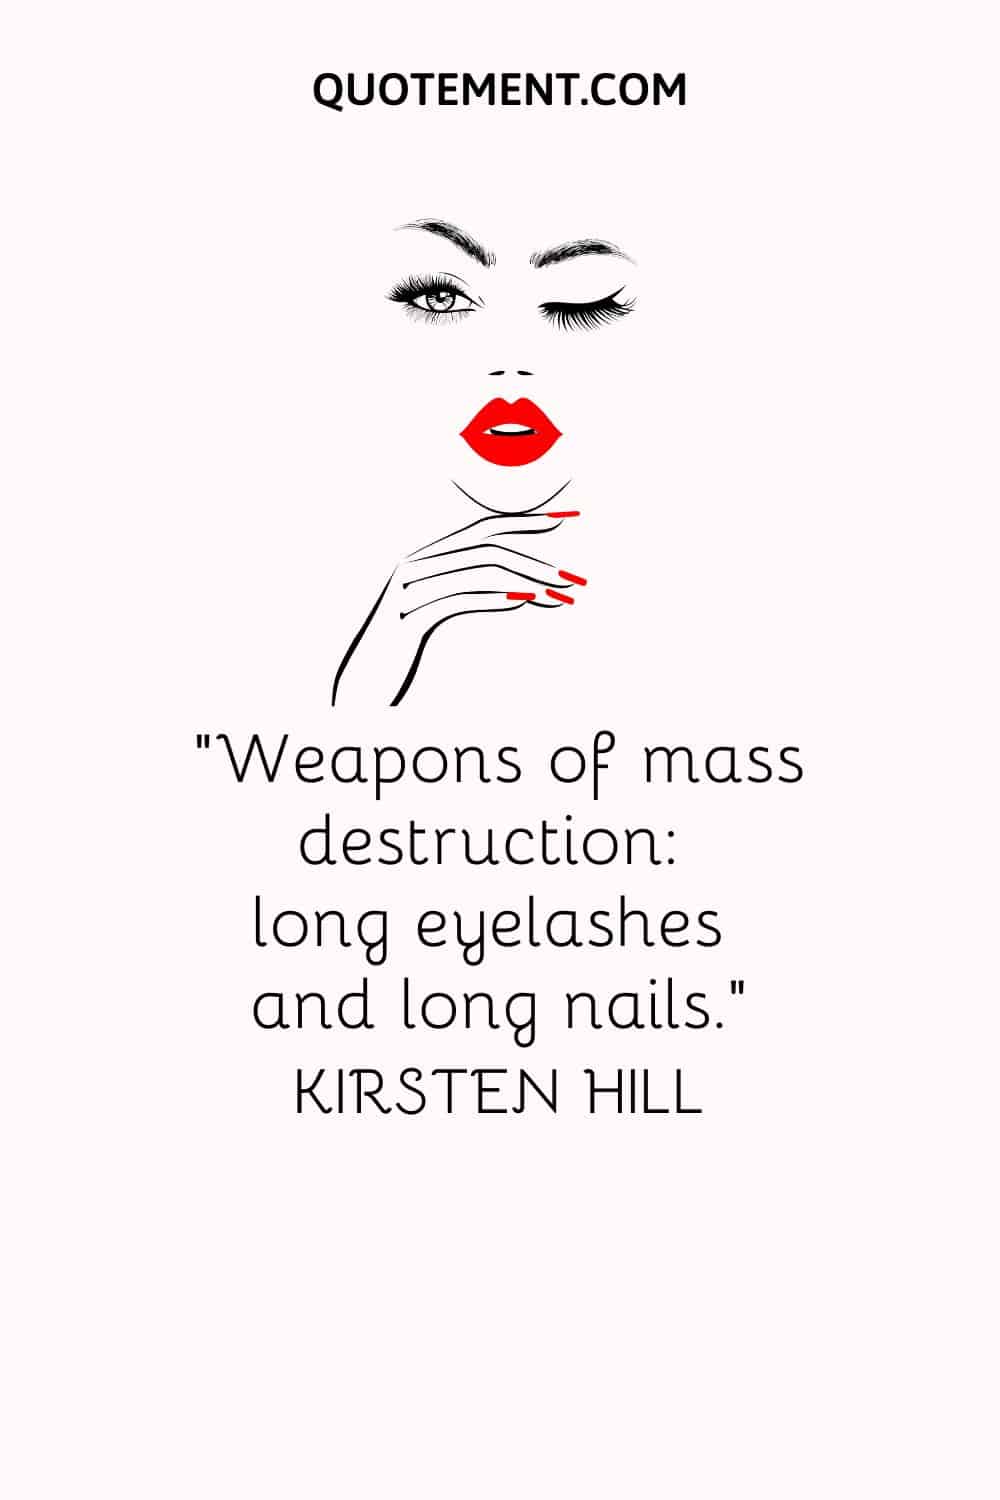 Weapons of mass destruction long eyelashes and long nails